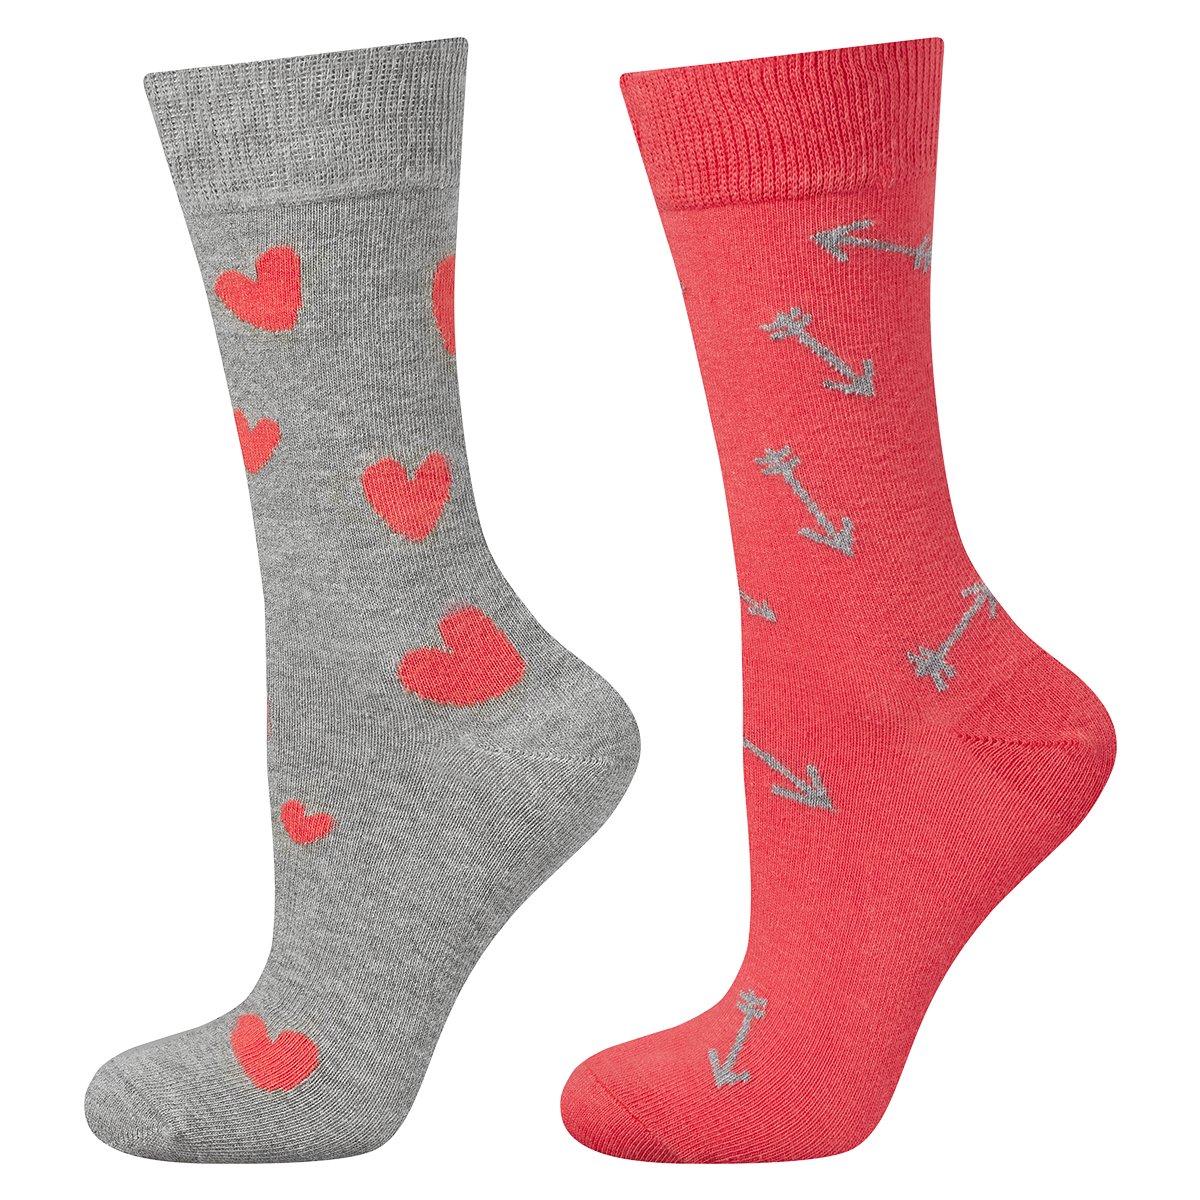 SOXO GOOD STUFF socks unmatched - Valentine's Day | SOXO | Socks ...